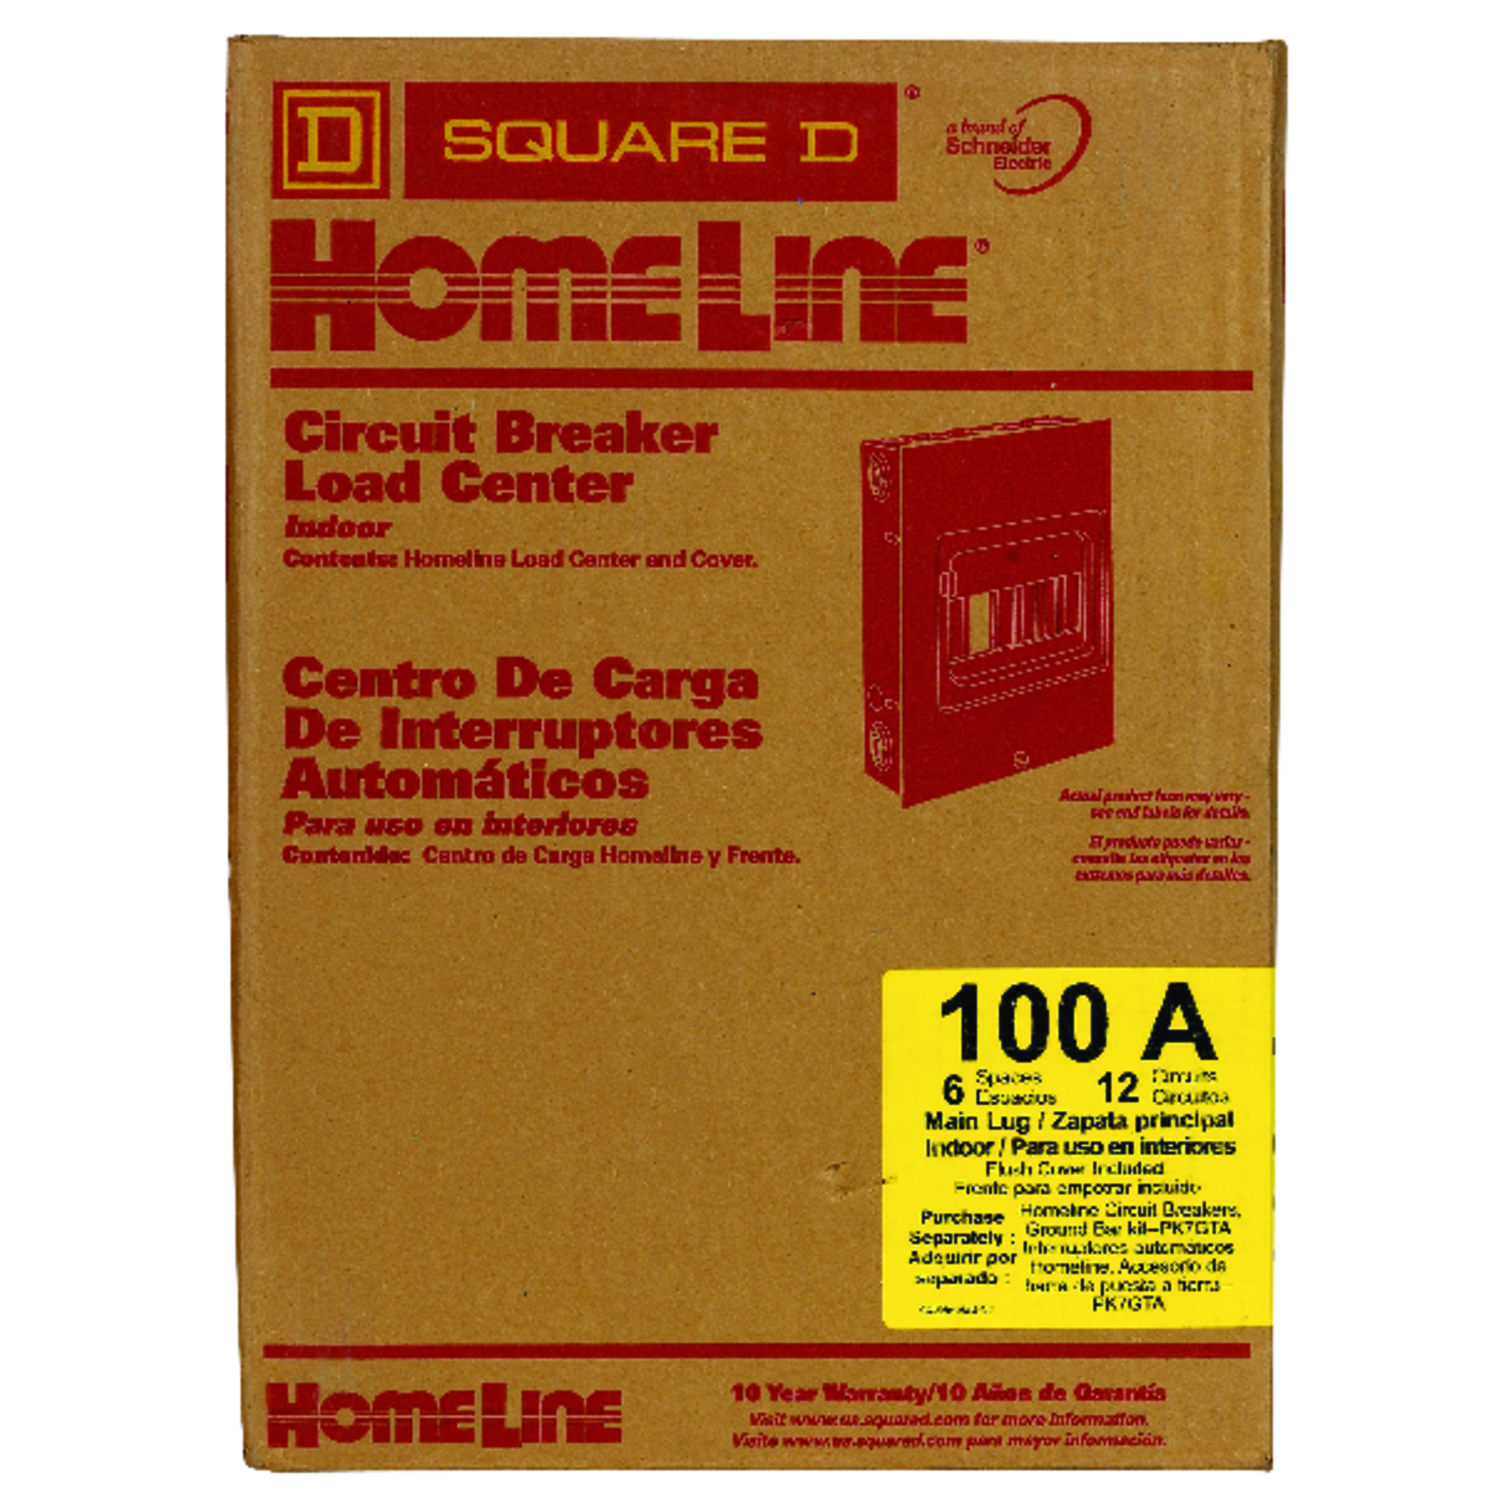 Square D HomeLine 100 amps 120/240 V 6 space 12 circuits Flush Mount Main Lug Load Center